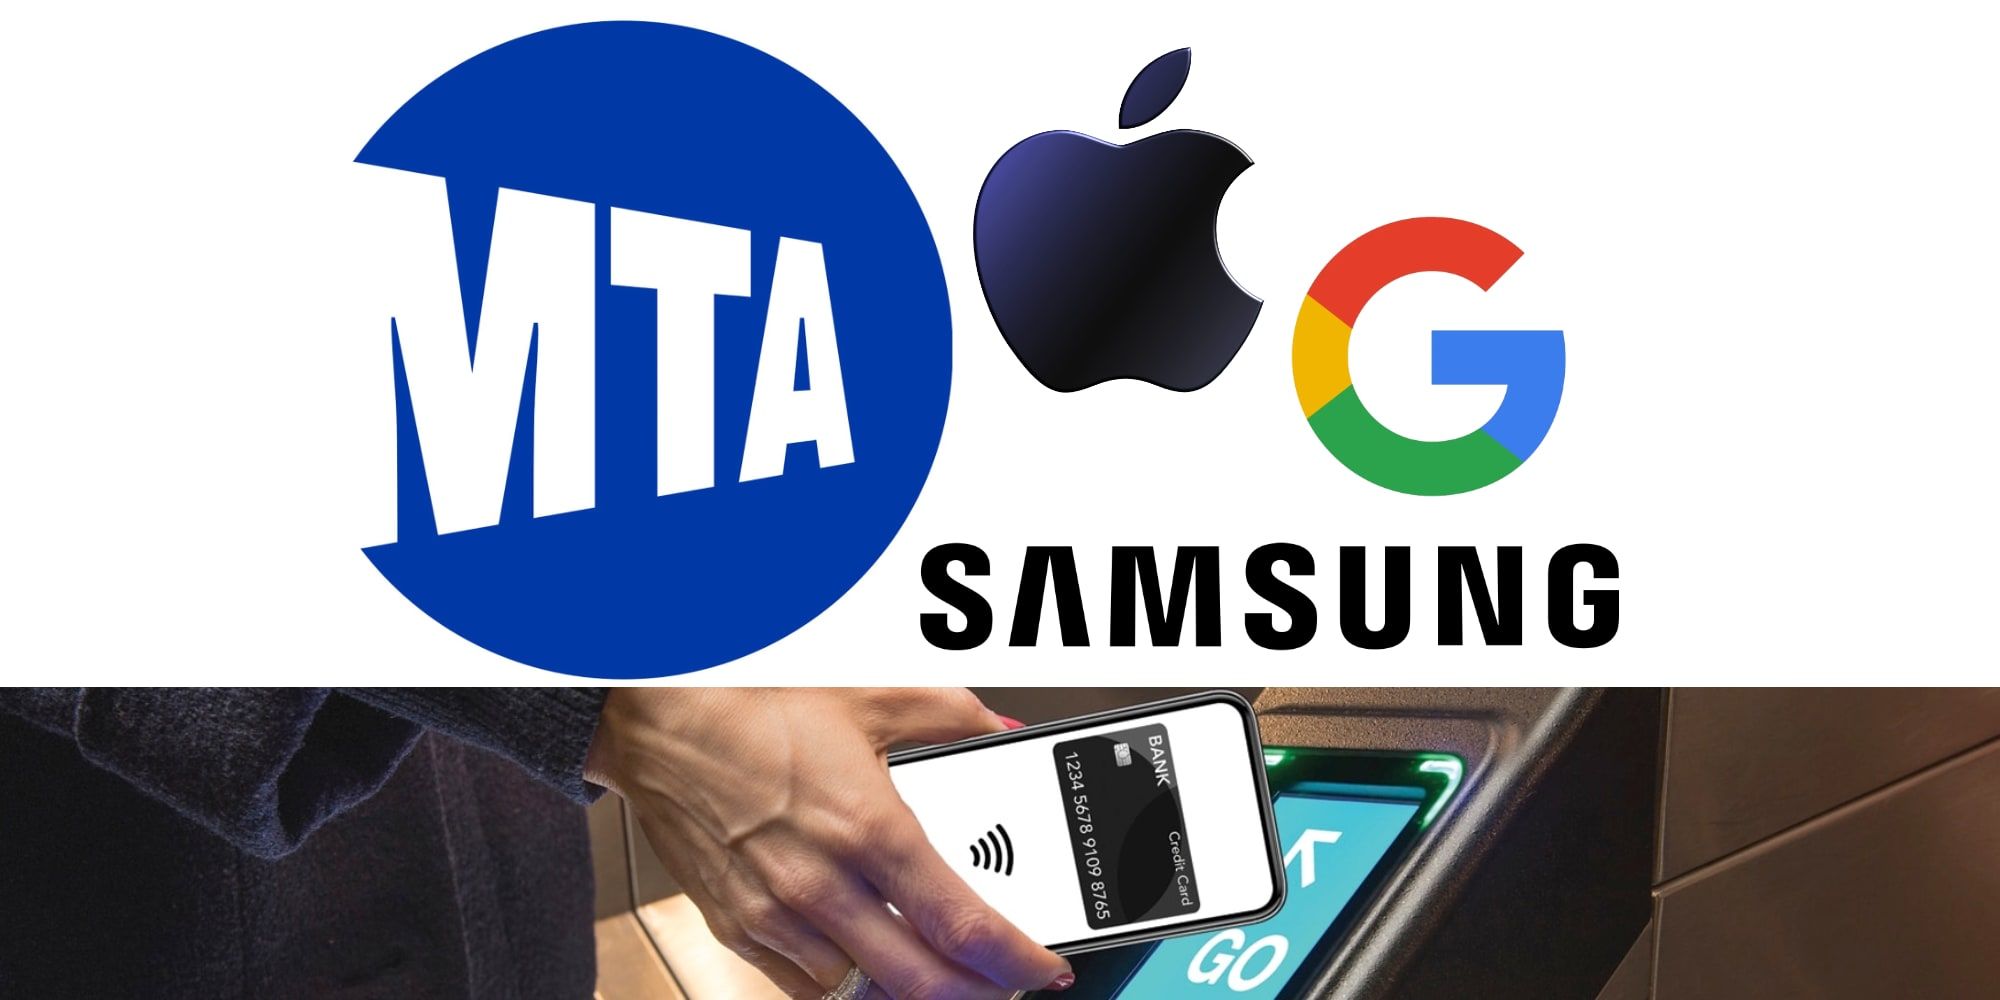 MTA, Apple, Google, and Samsung logos